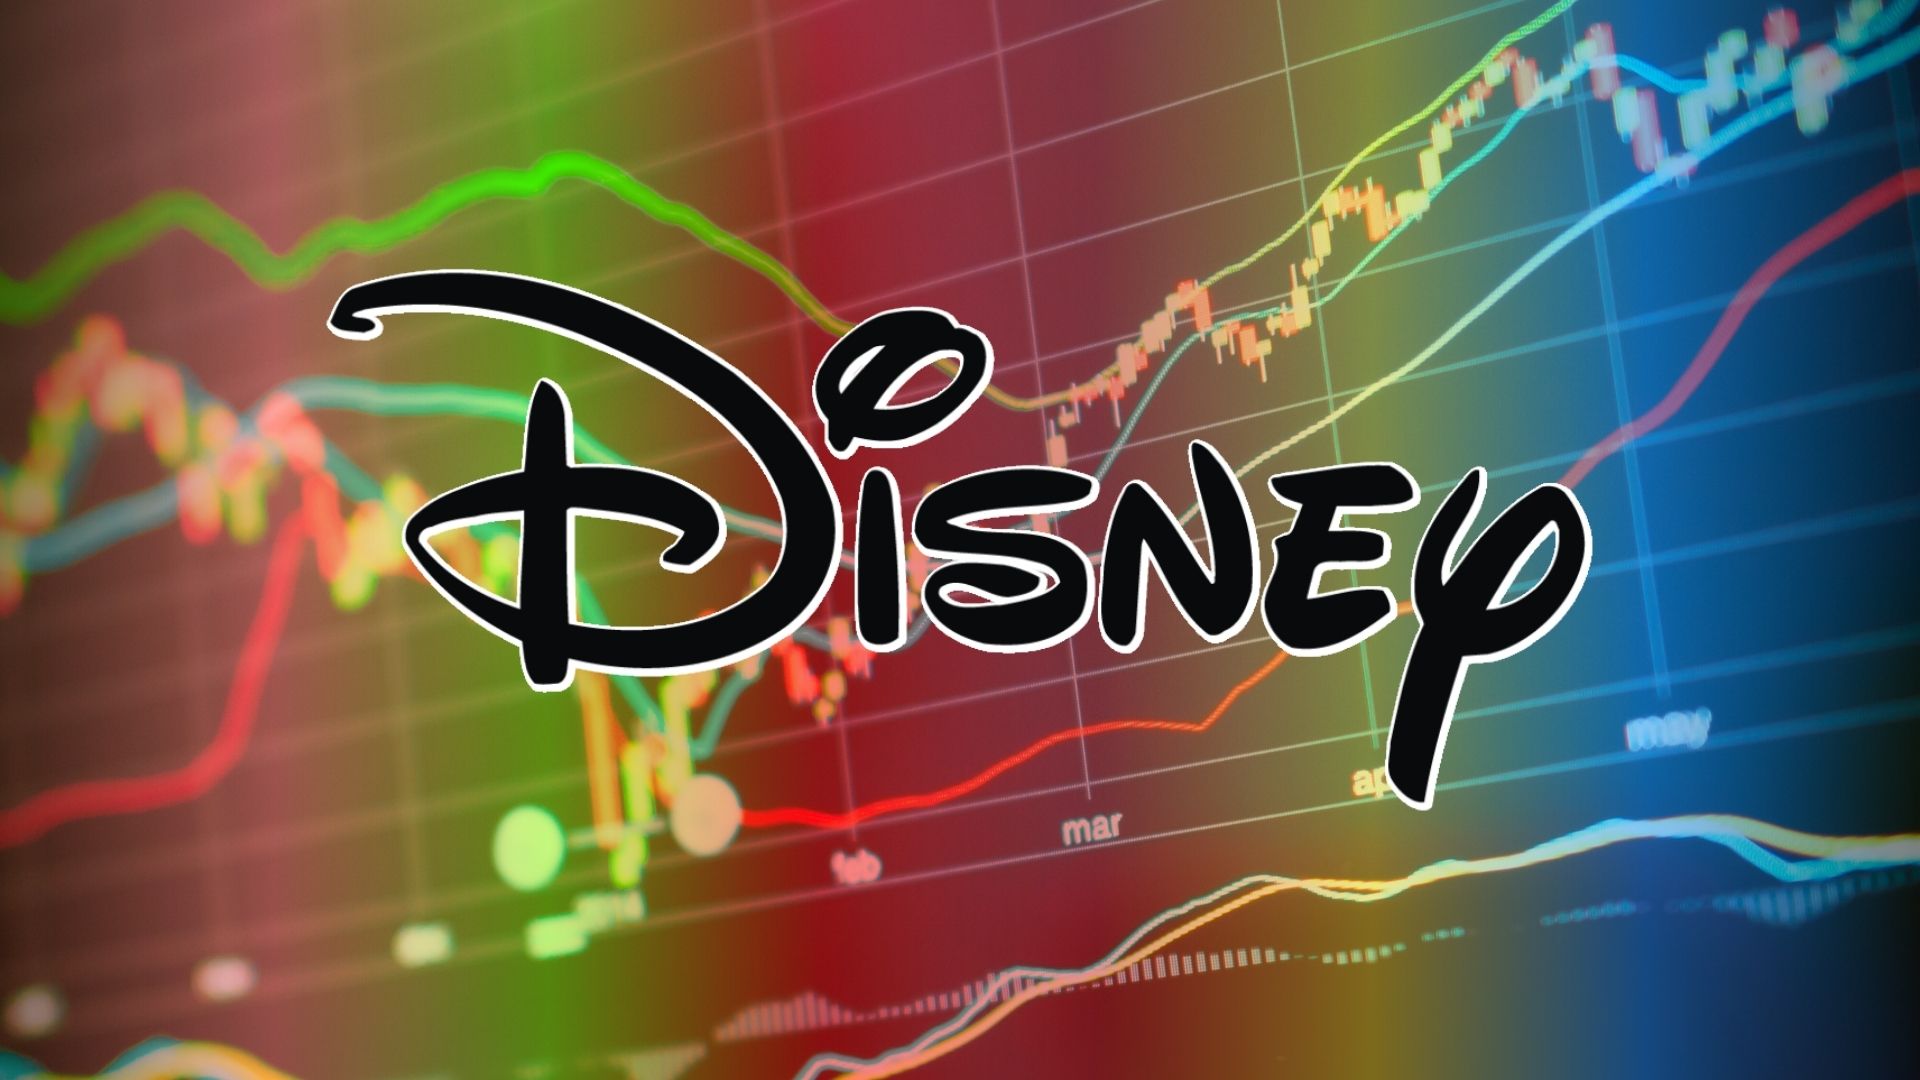 Walt Disney Company Stock Price Prediction: What Next For DIS?